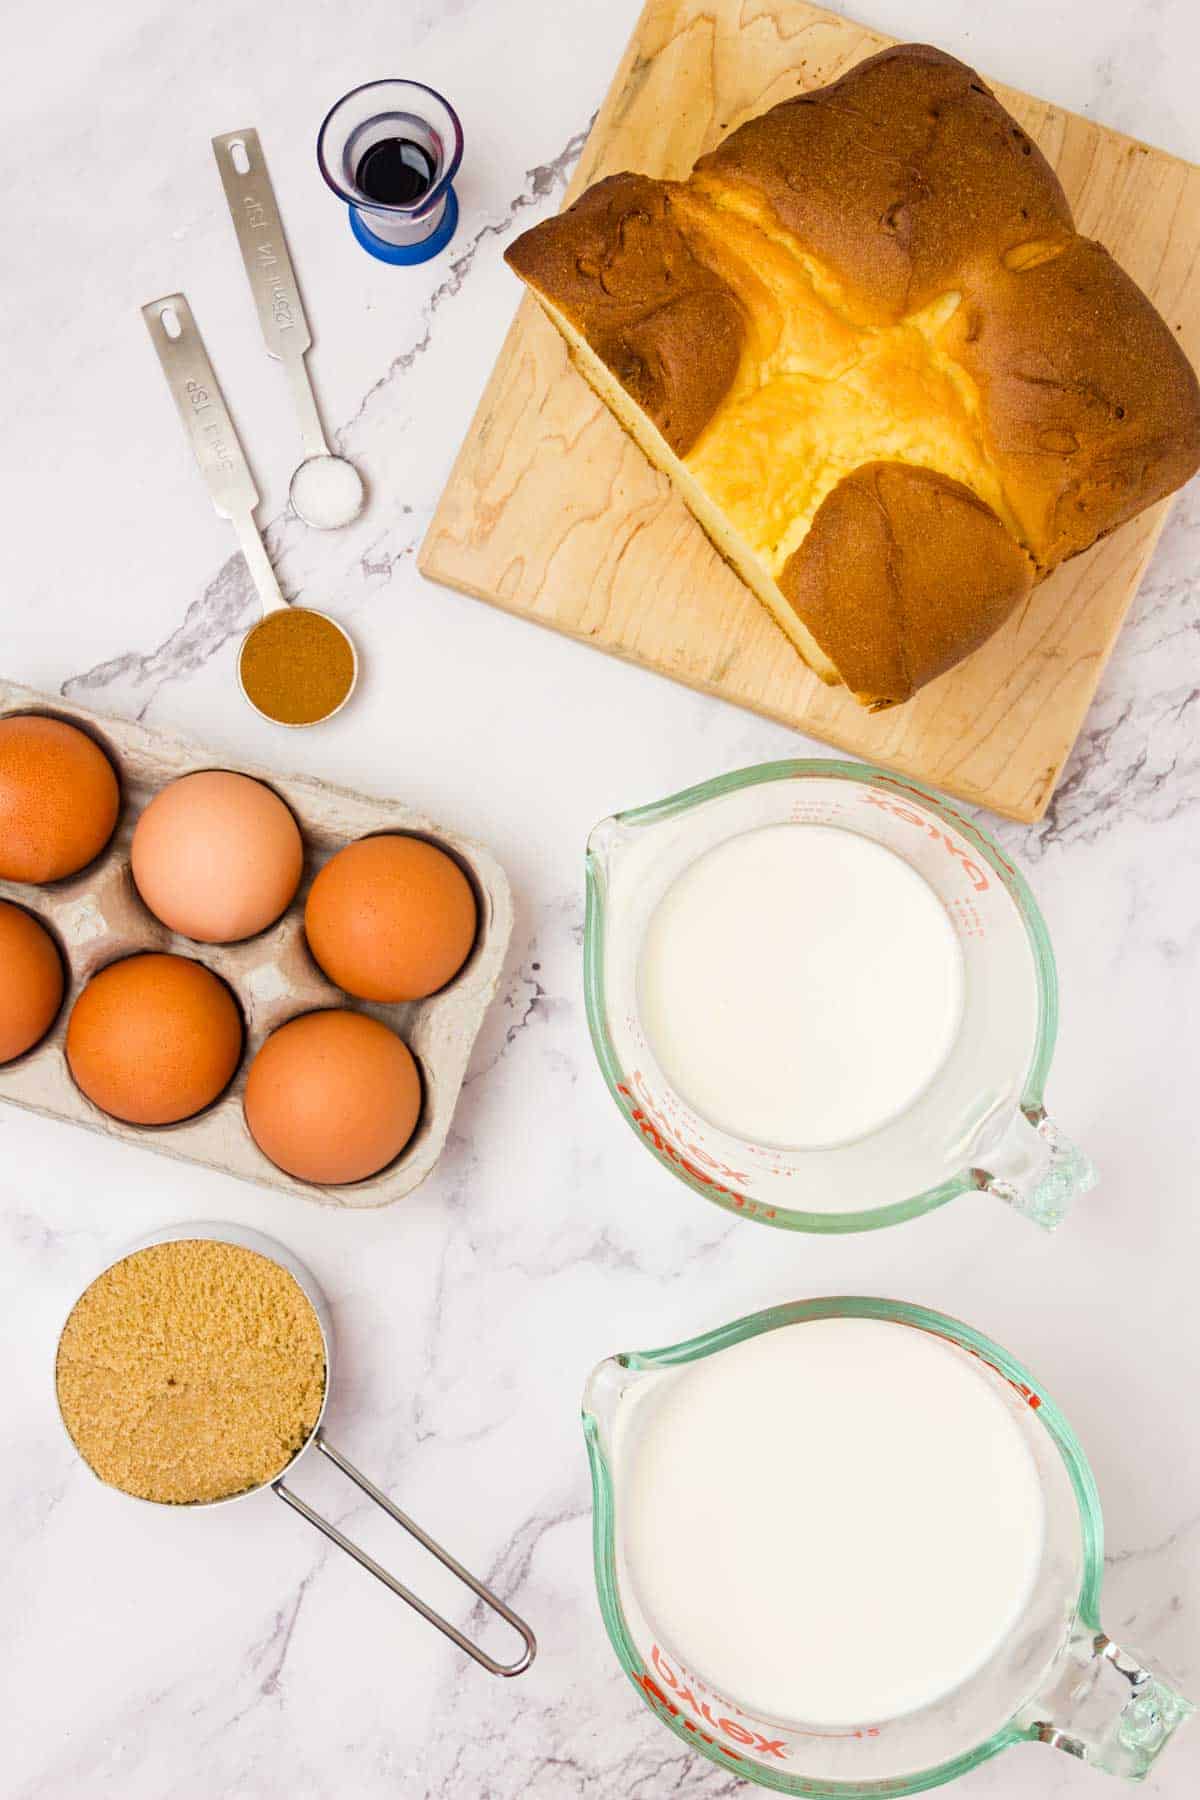 The ingredients for French toast casserole are shown: eggs, bread, milk, cream, brown sugar, cinnamon.